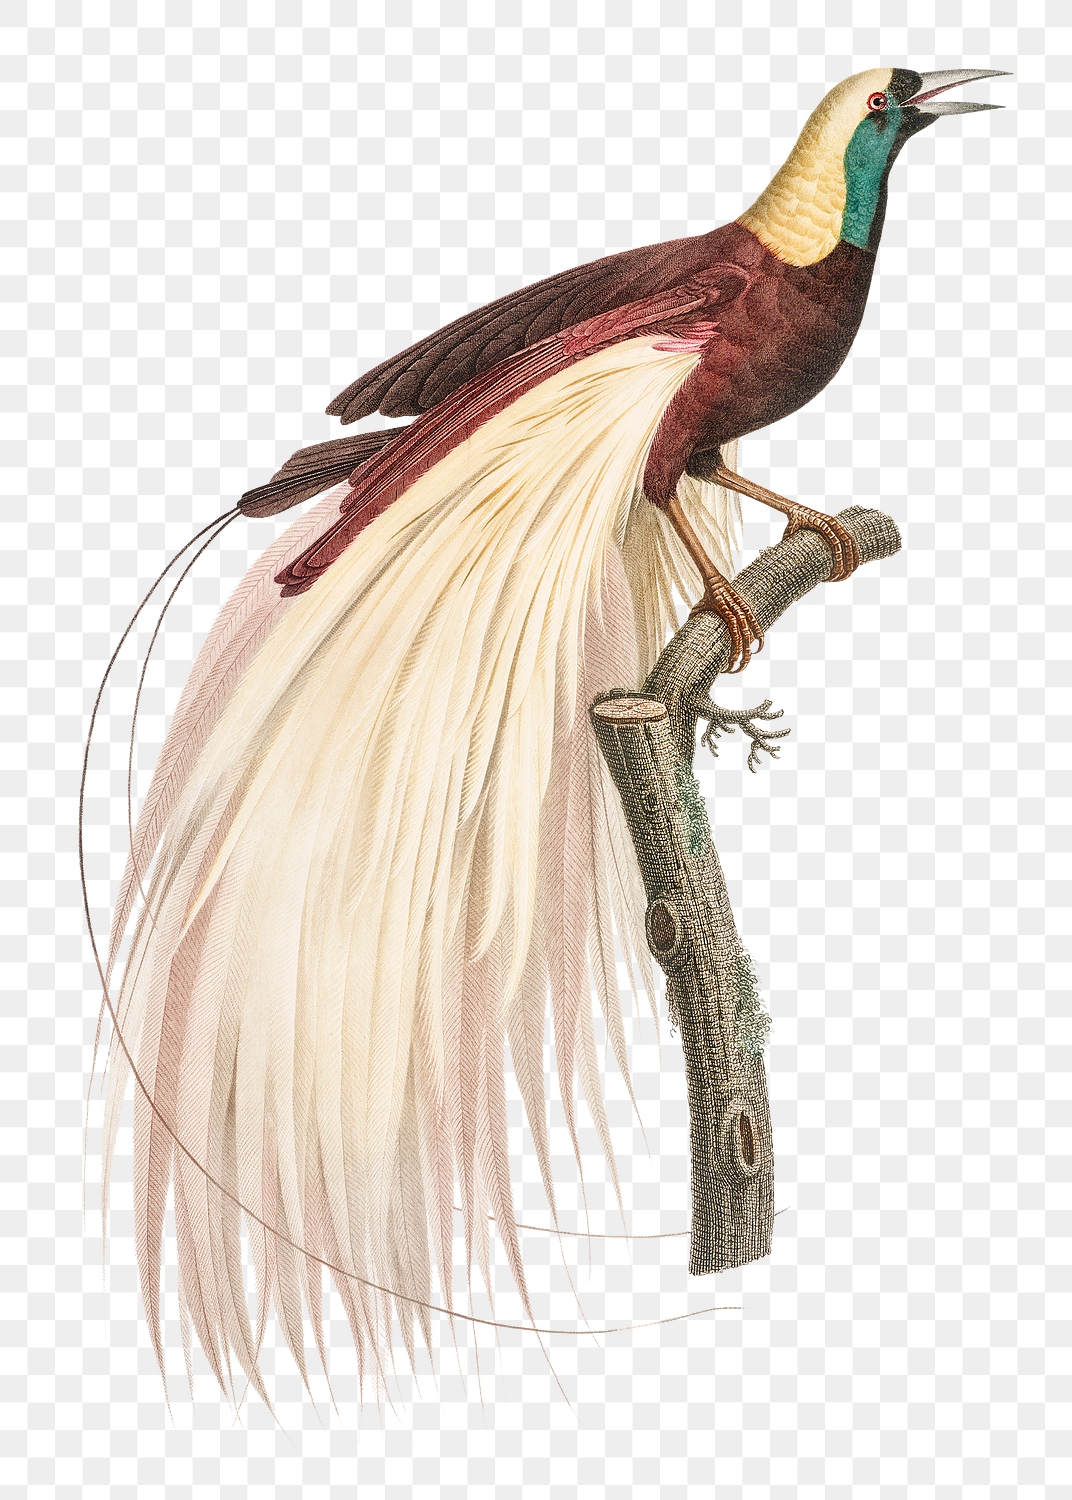 Emperor bird of paradise png | Premium PNG Sticker - rawpixel